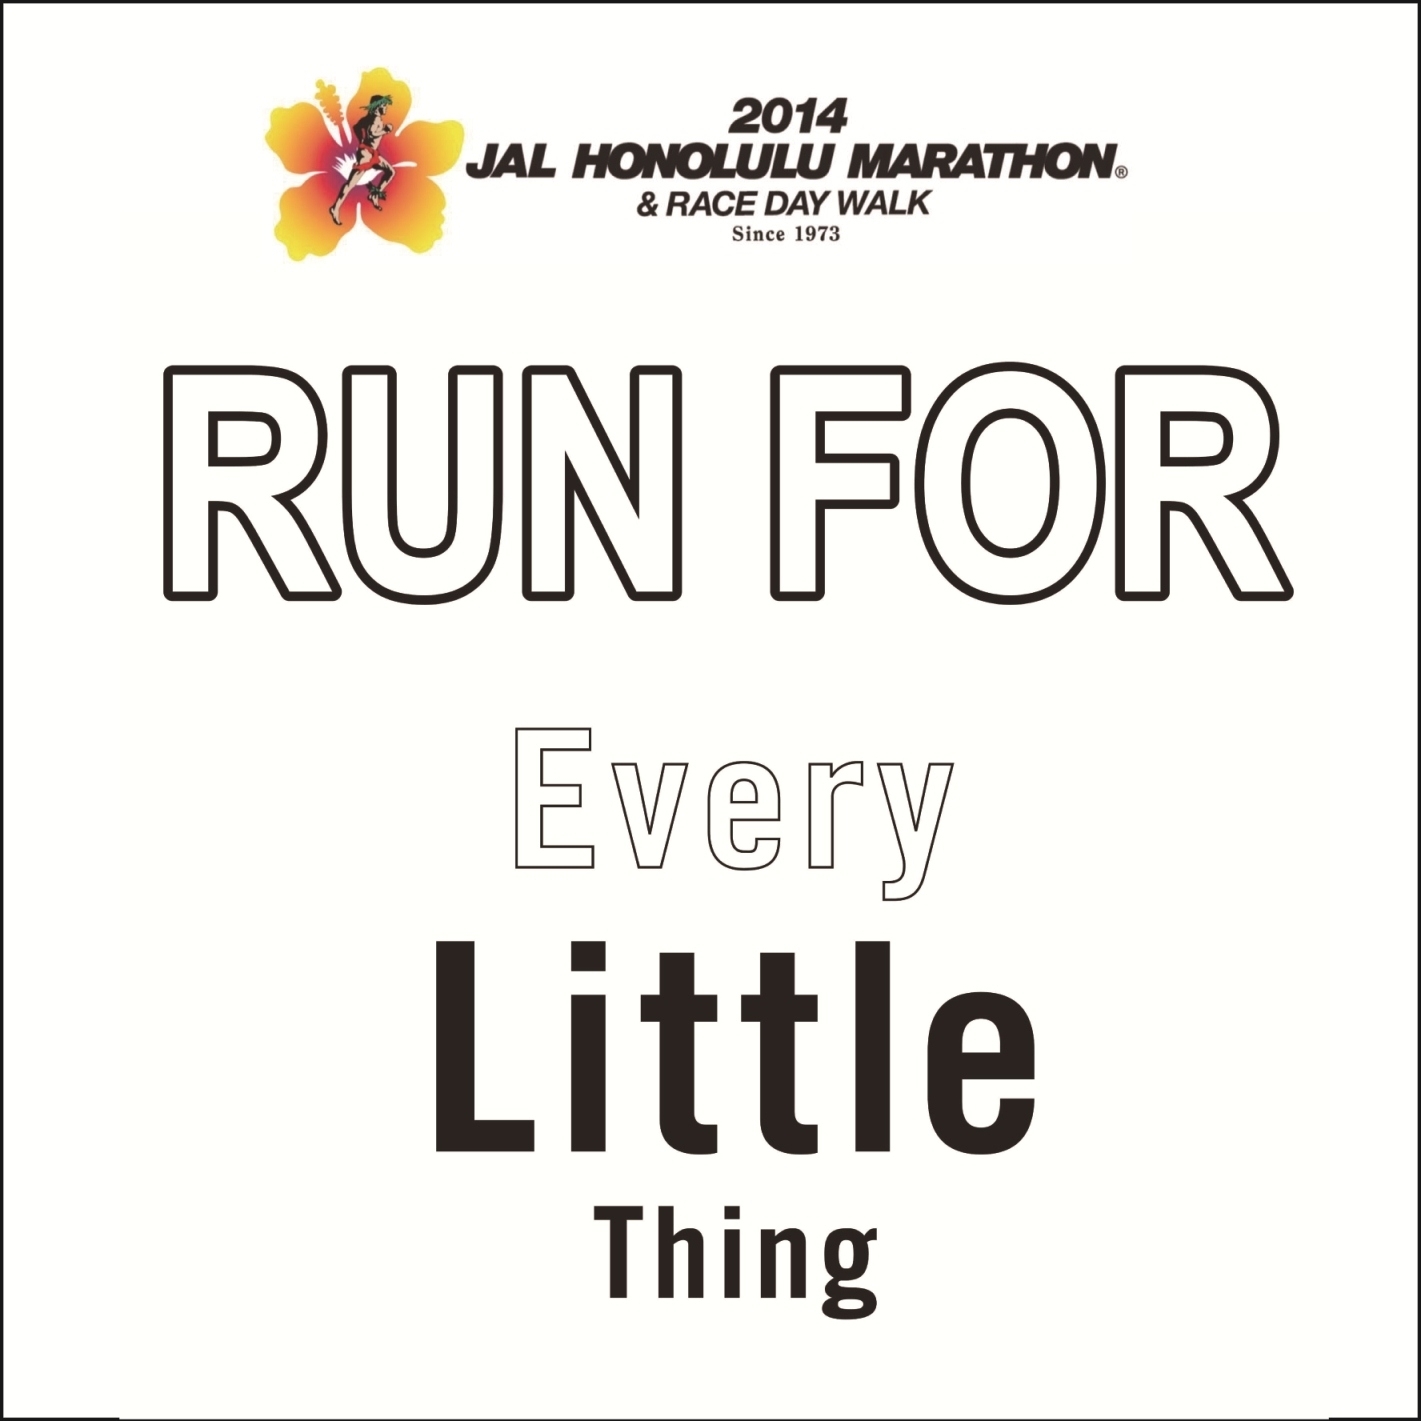 Jalホノルルマラソン14 オフィシャルテーマソングevery Little Thing Run For 9月24日より各サイトにて配信スタート Jalホノルルマラソン広報事務局のプレスリリース